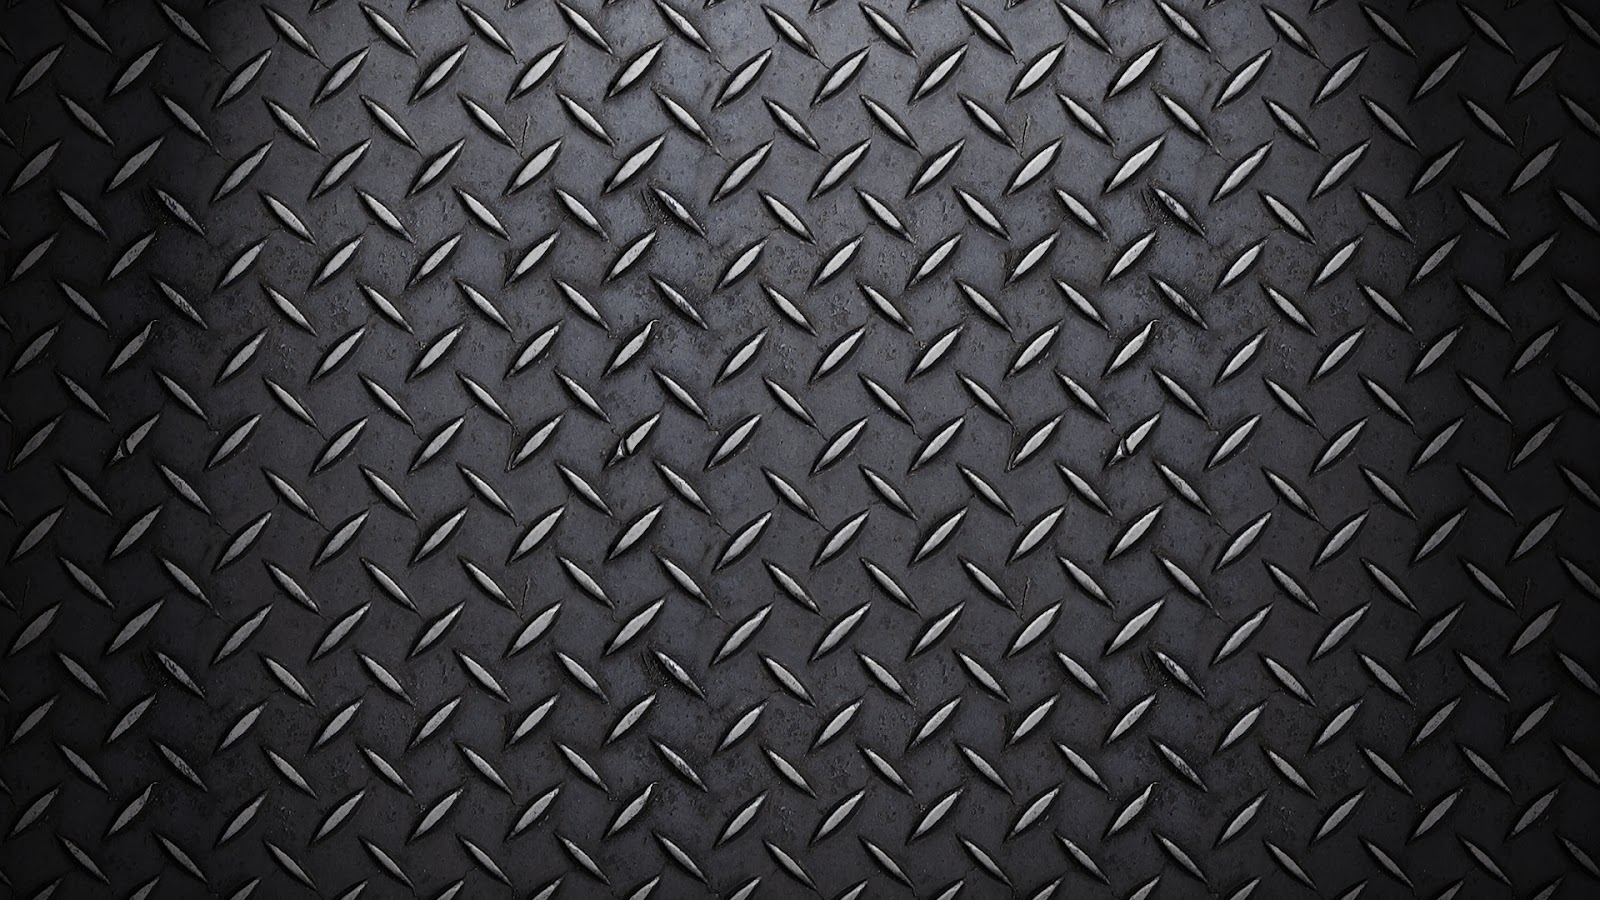 45+] Dark Pattern HD Wallpaper - WallpaperSafari